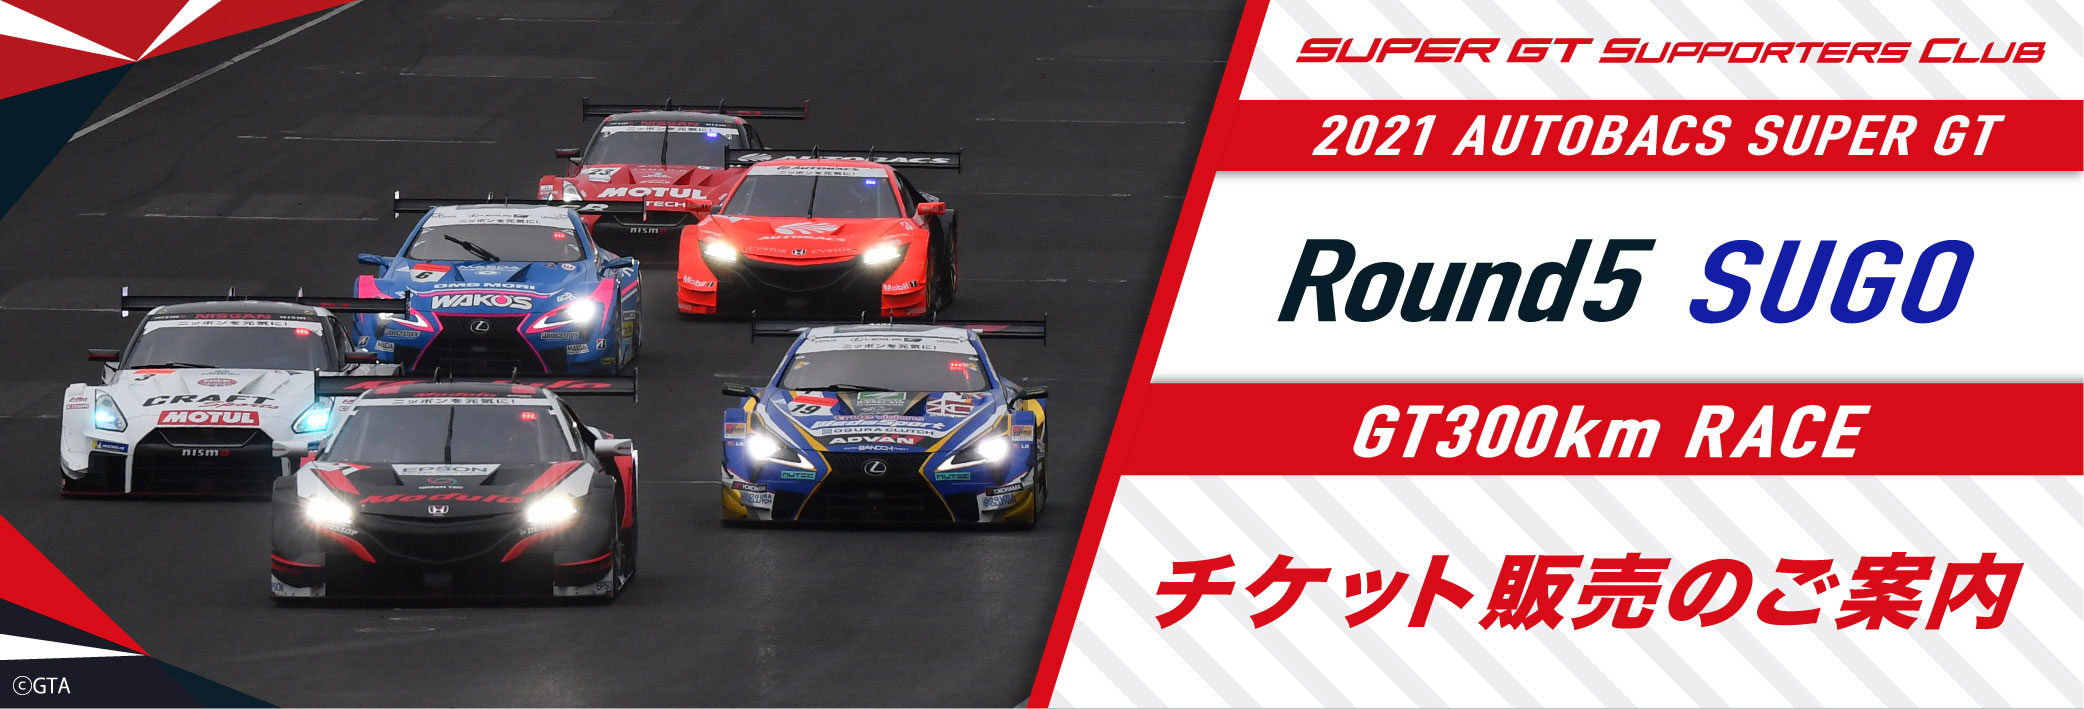 2021 AUTOBACS SUPER GT Round5 SUGO GT 300km RACE チケット販売のご案内 SUPER GT  SQUARE